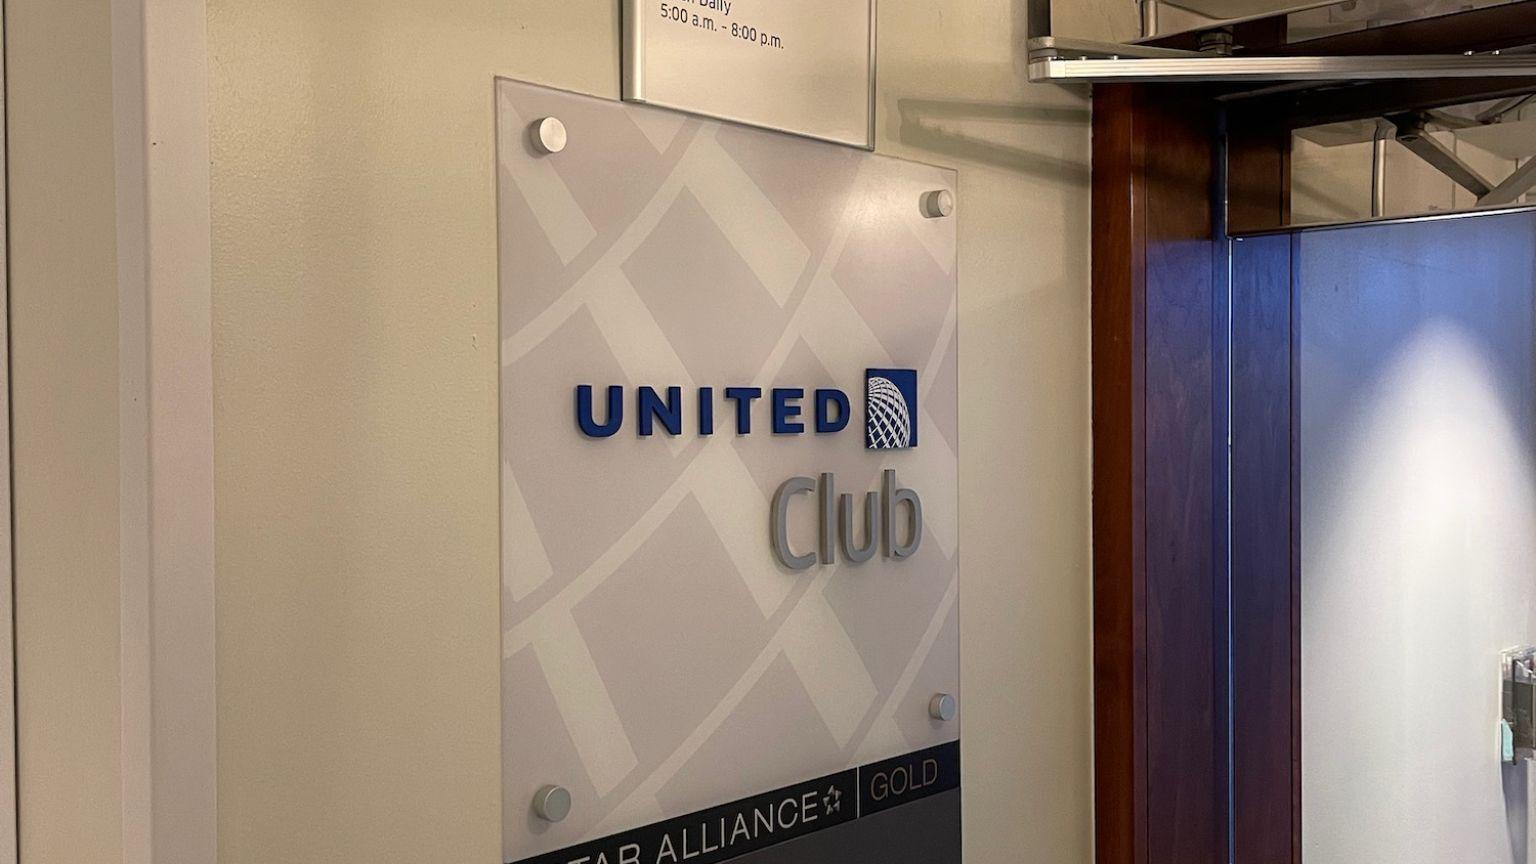 United Club Lounge Orlando, T B